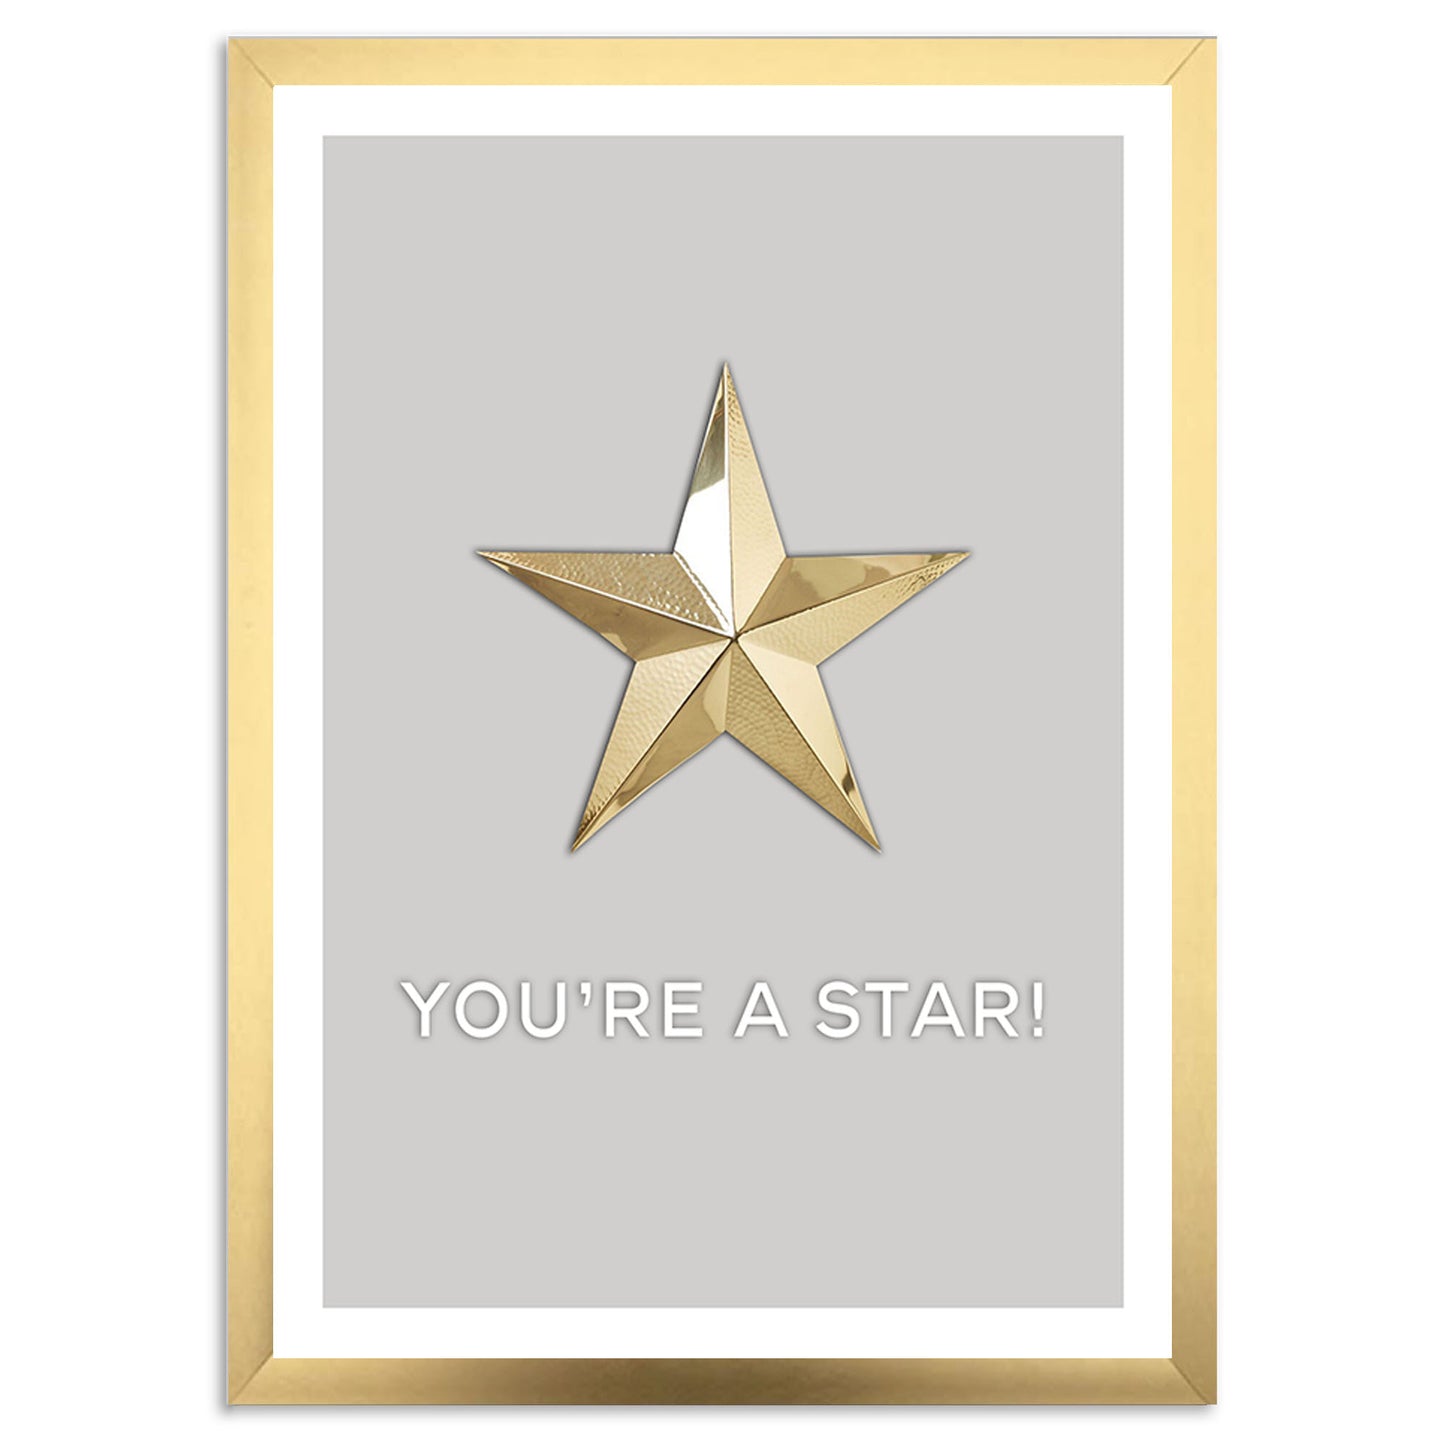 You're a Star! Art Print